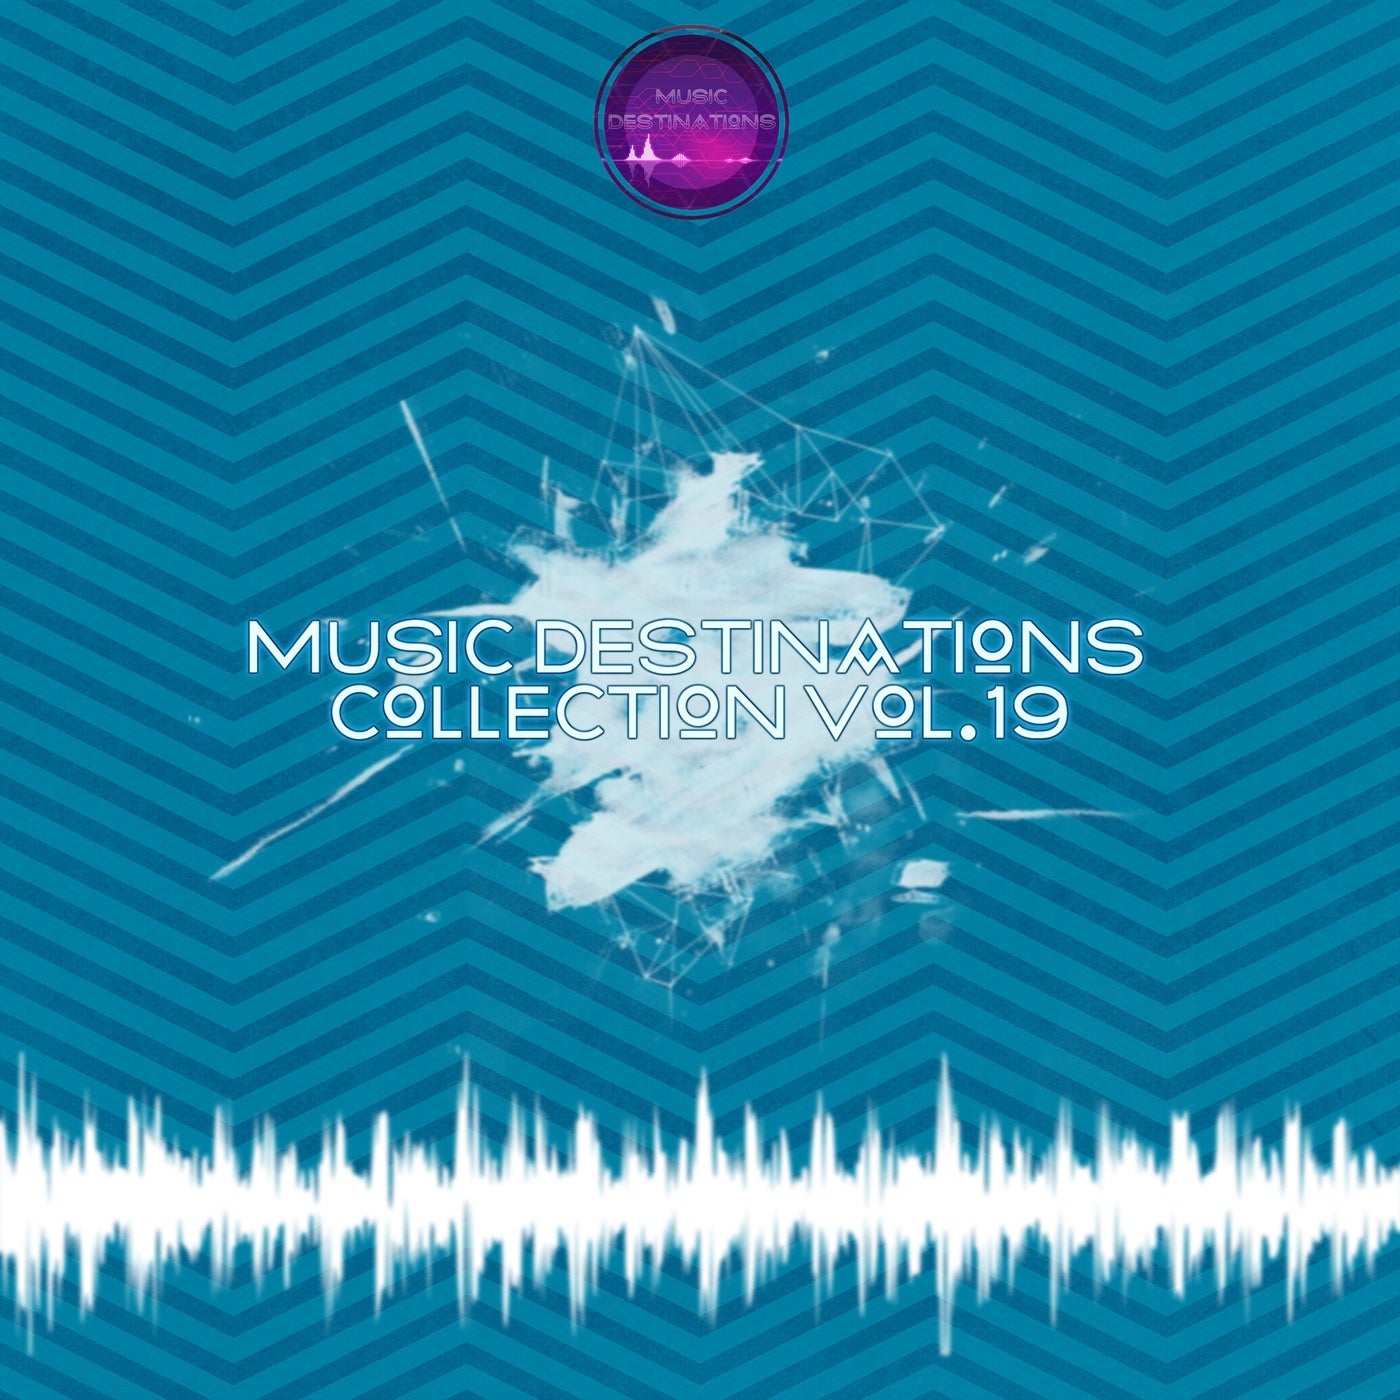 Music Destinations Collection Vol. 19